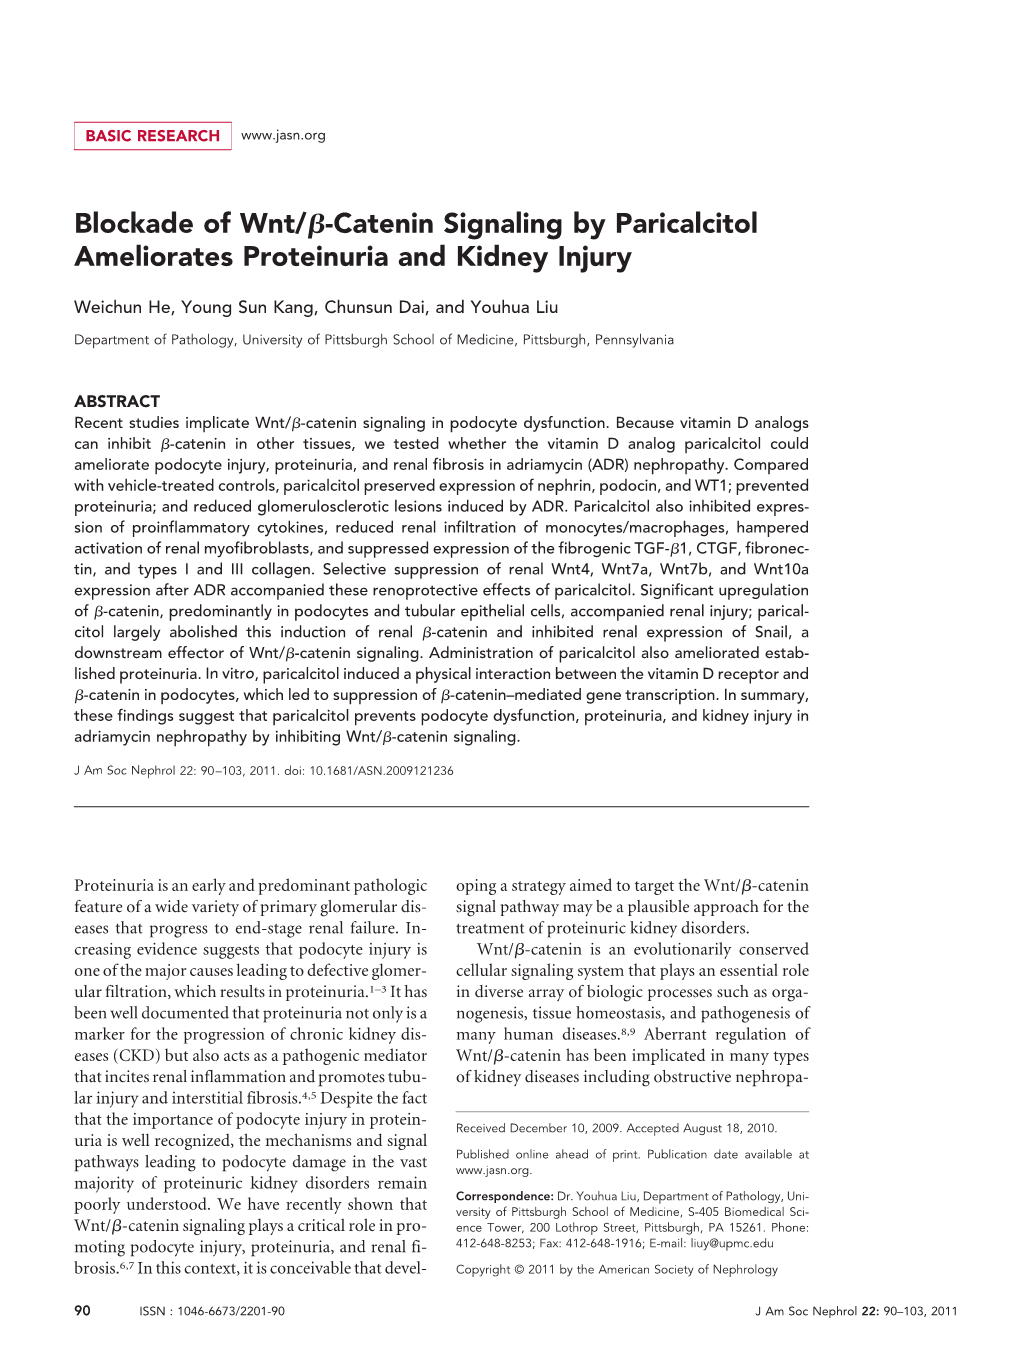 Blockade of Wnt/ß-Catenin Signaling by Paricalcitol Ameliorates